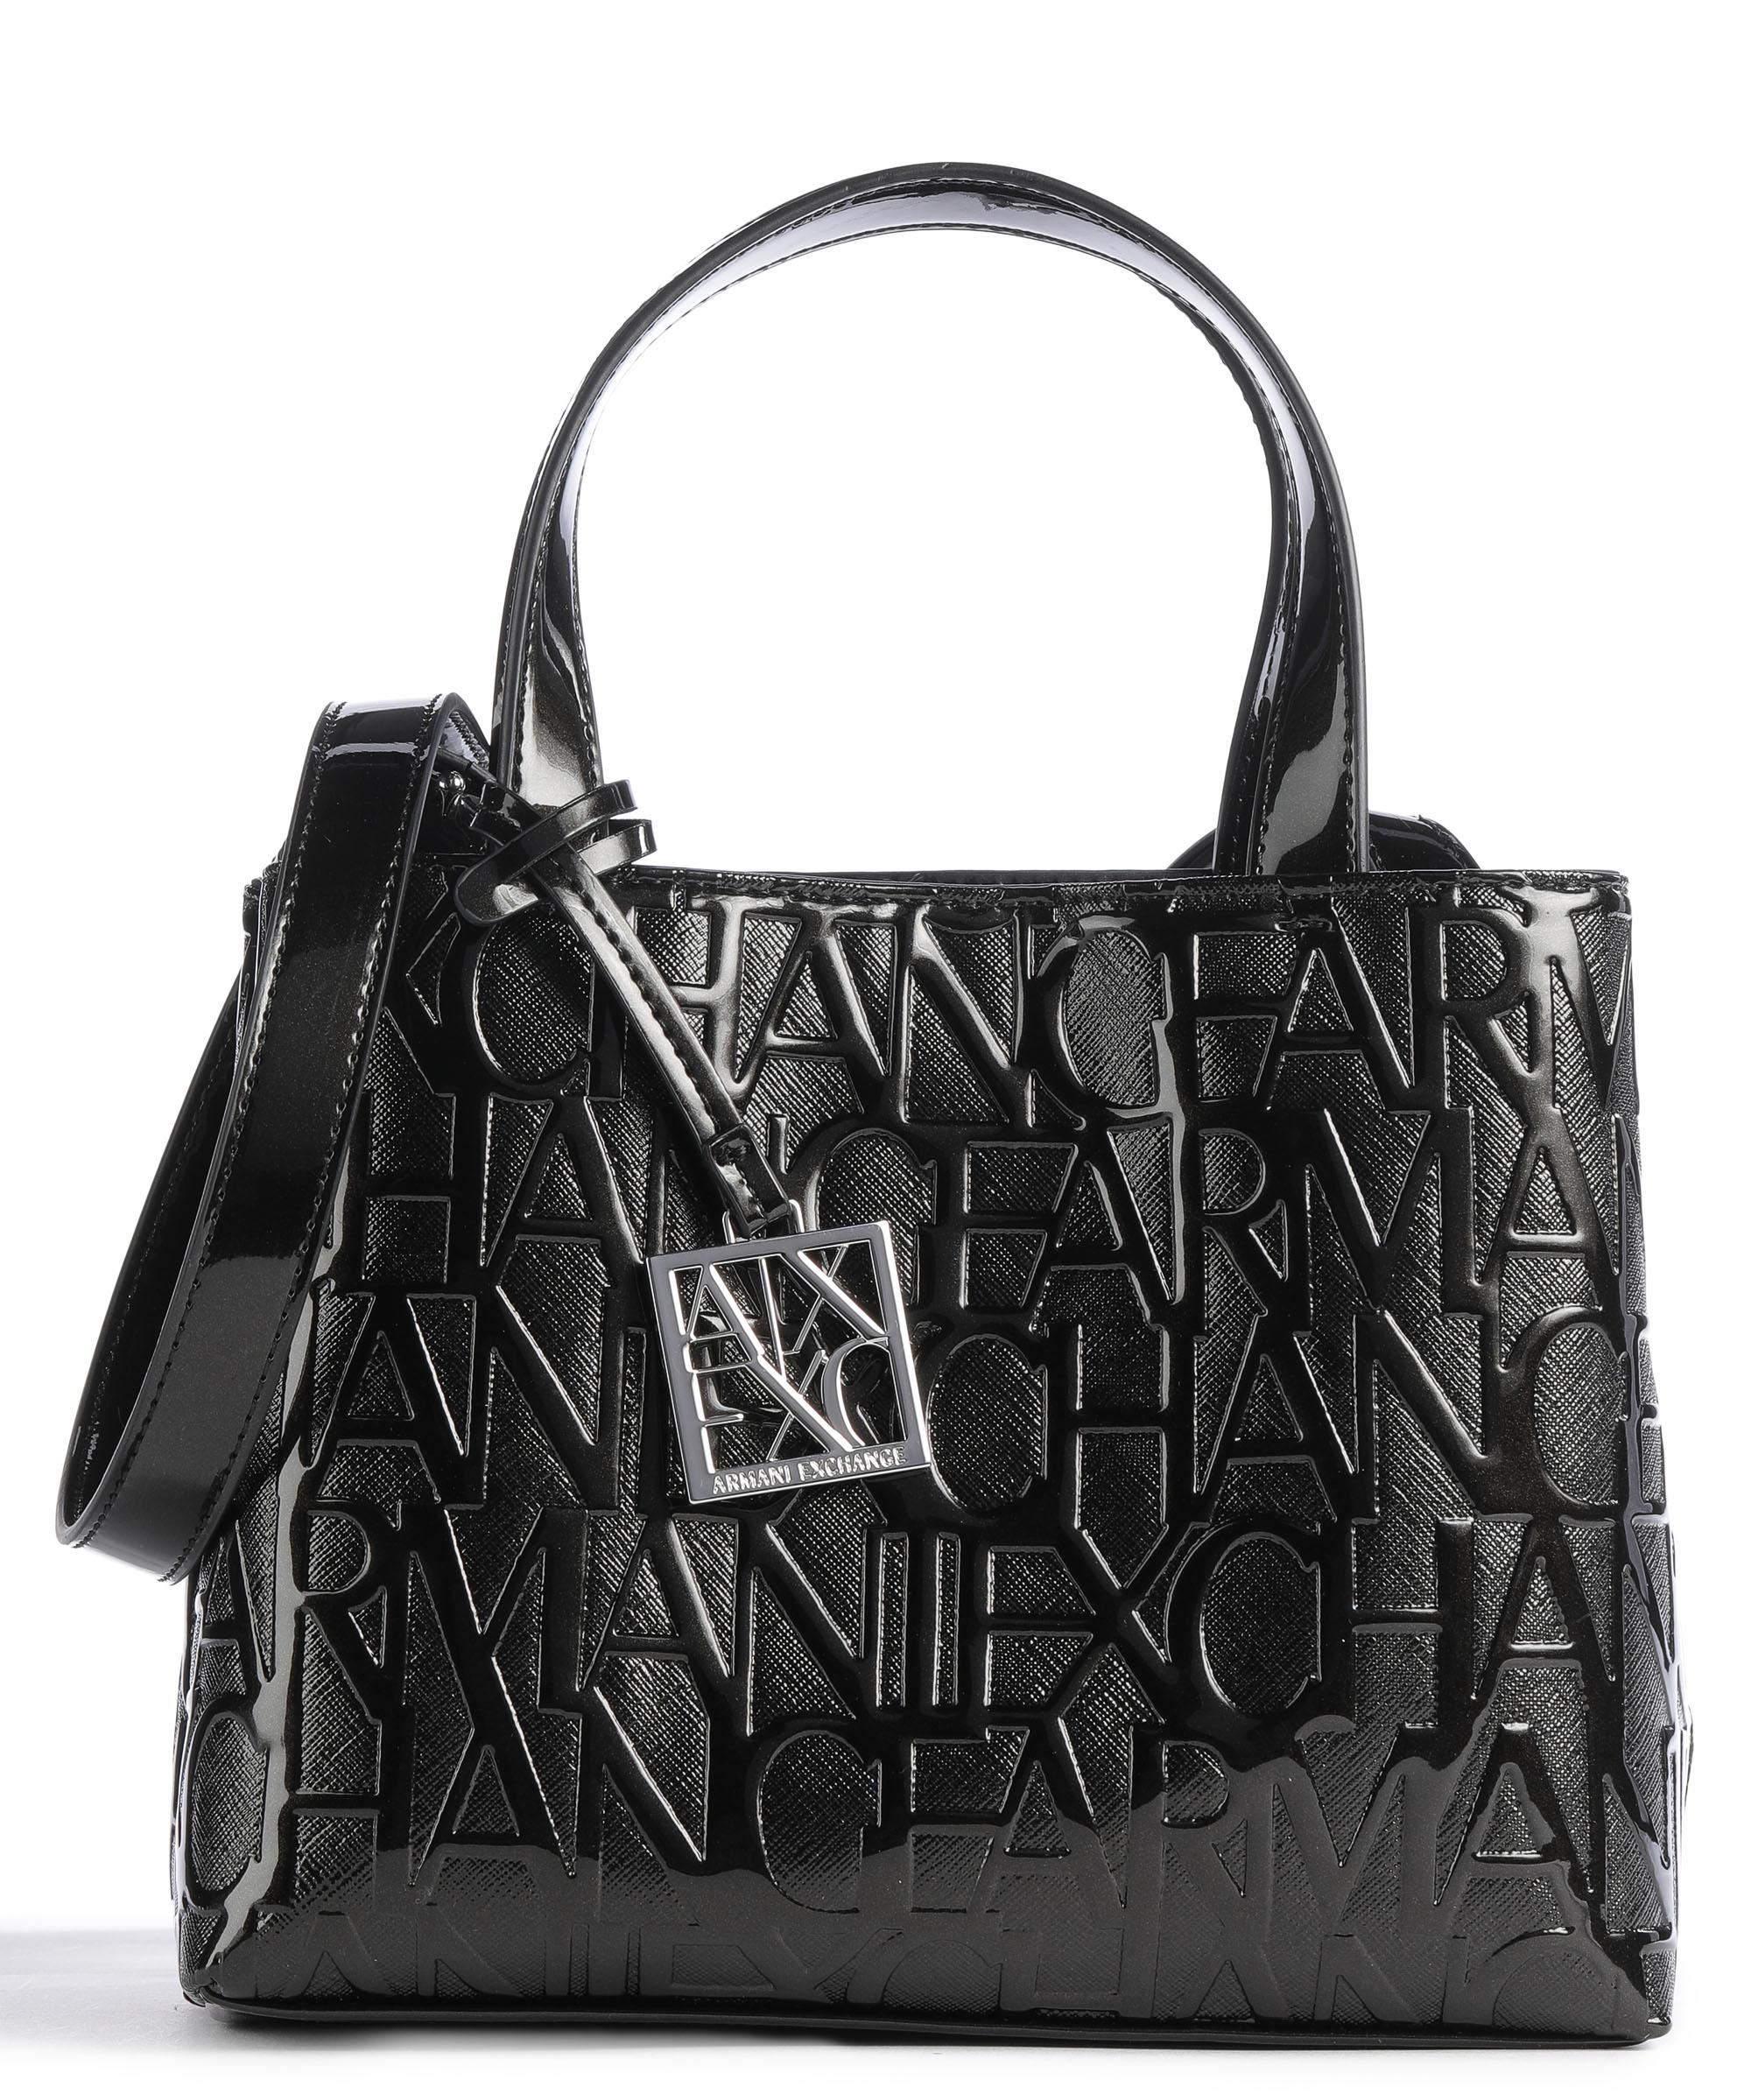 Armani Exchange Bags for Women - Shop on FARFETCH